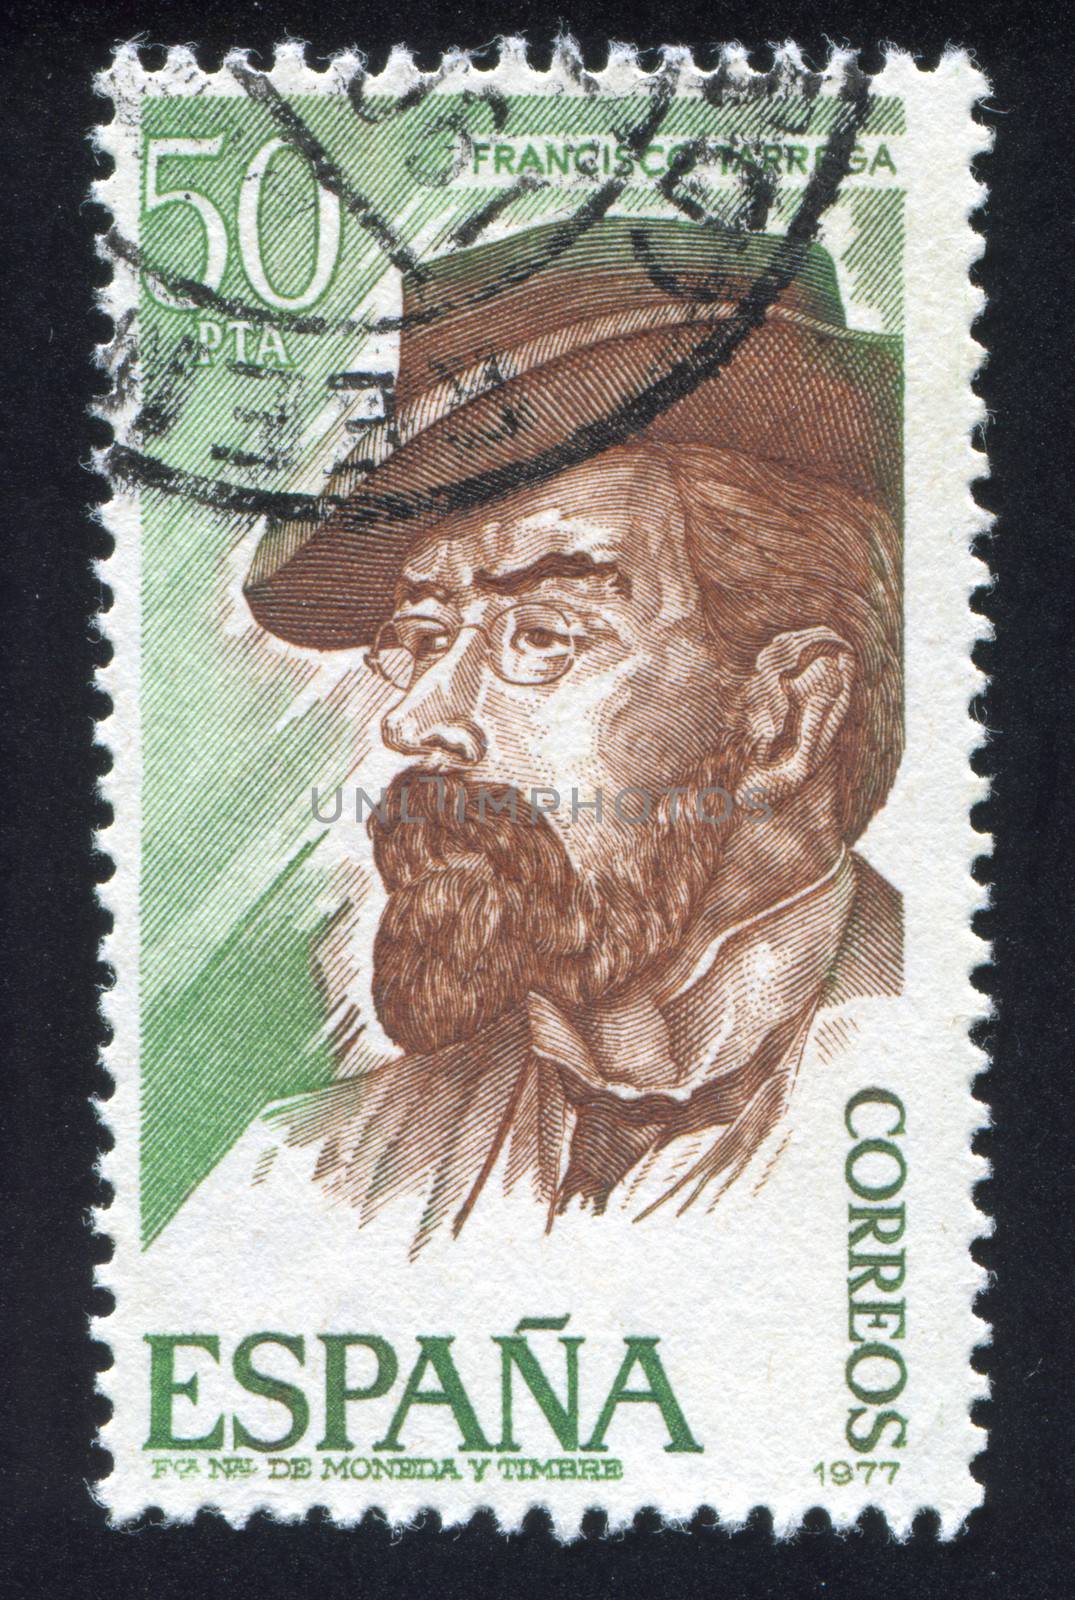 SPAIN - CIRCA 1977: stamp printed by Spain, shows Francisco Tarrega, circa 1977